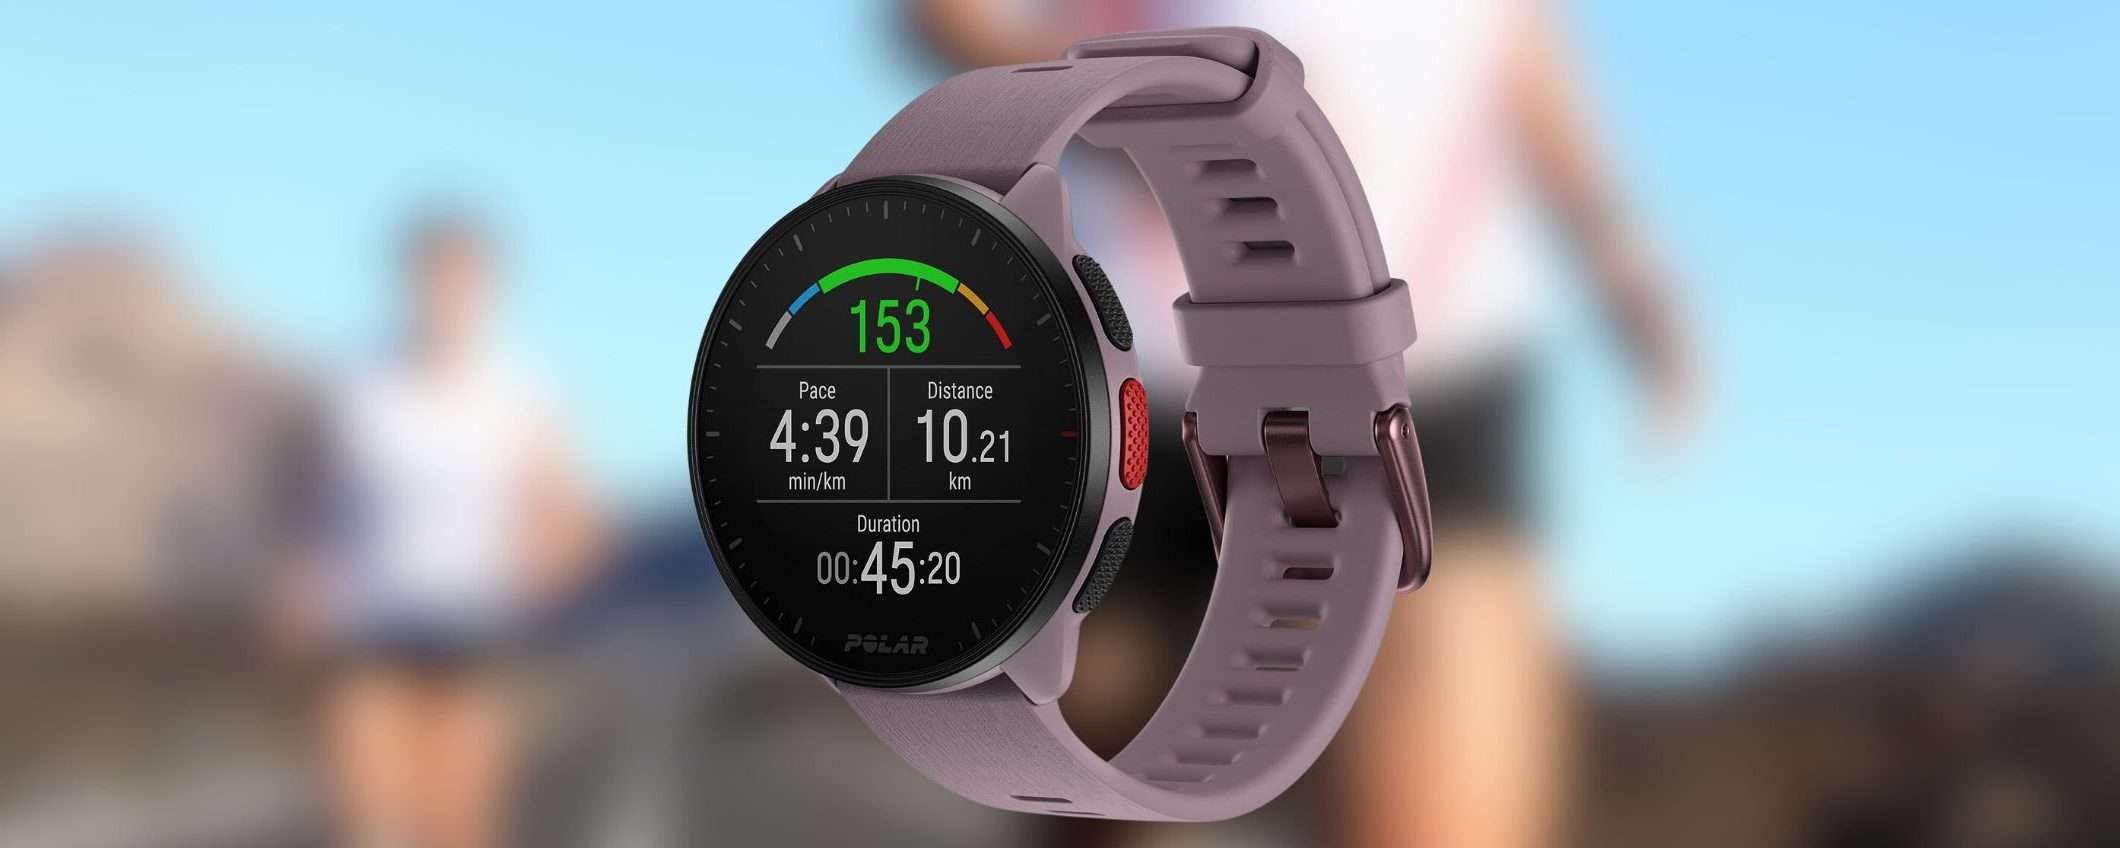 Polar Pacer: ottimo sconto per questo smartwatch sportivo